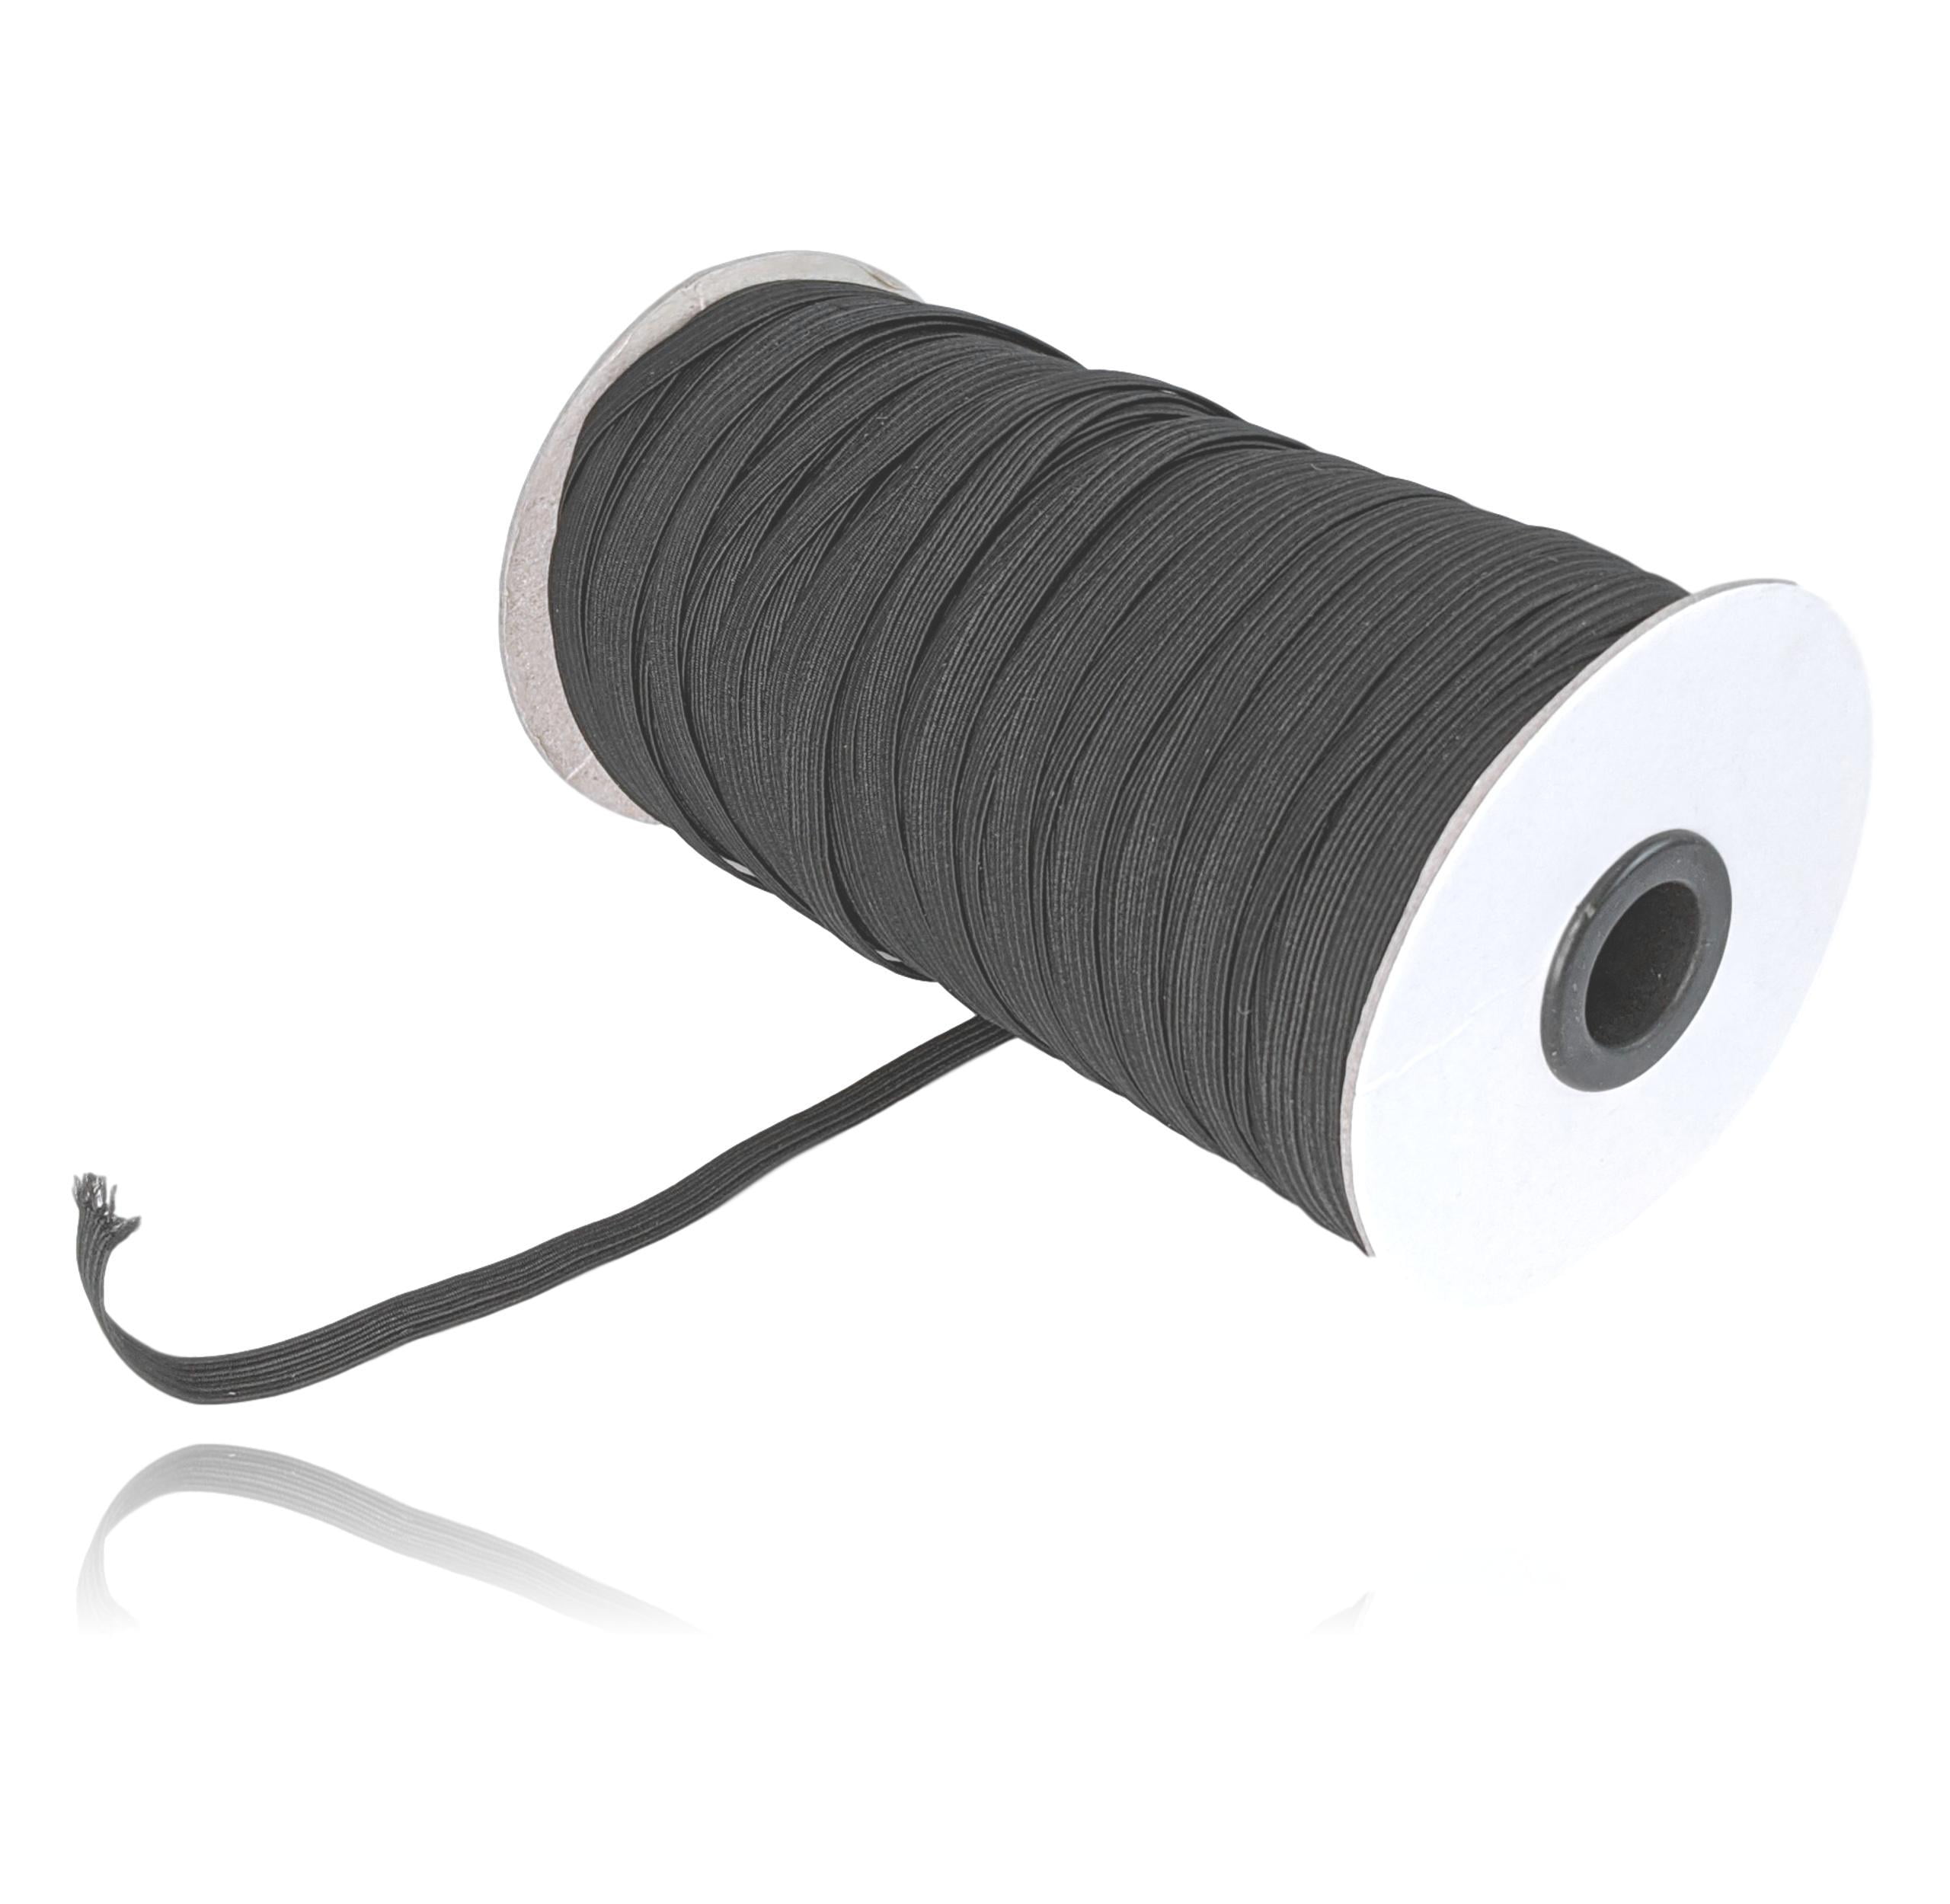 Pressing Stringnylon Elastic Bands For Knitting & Crafting - 40m Roll,  Braided Flat Elastic Cord